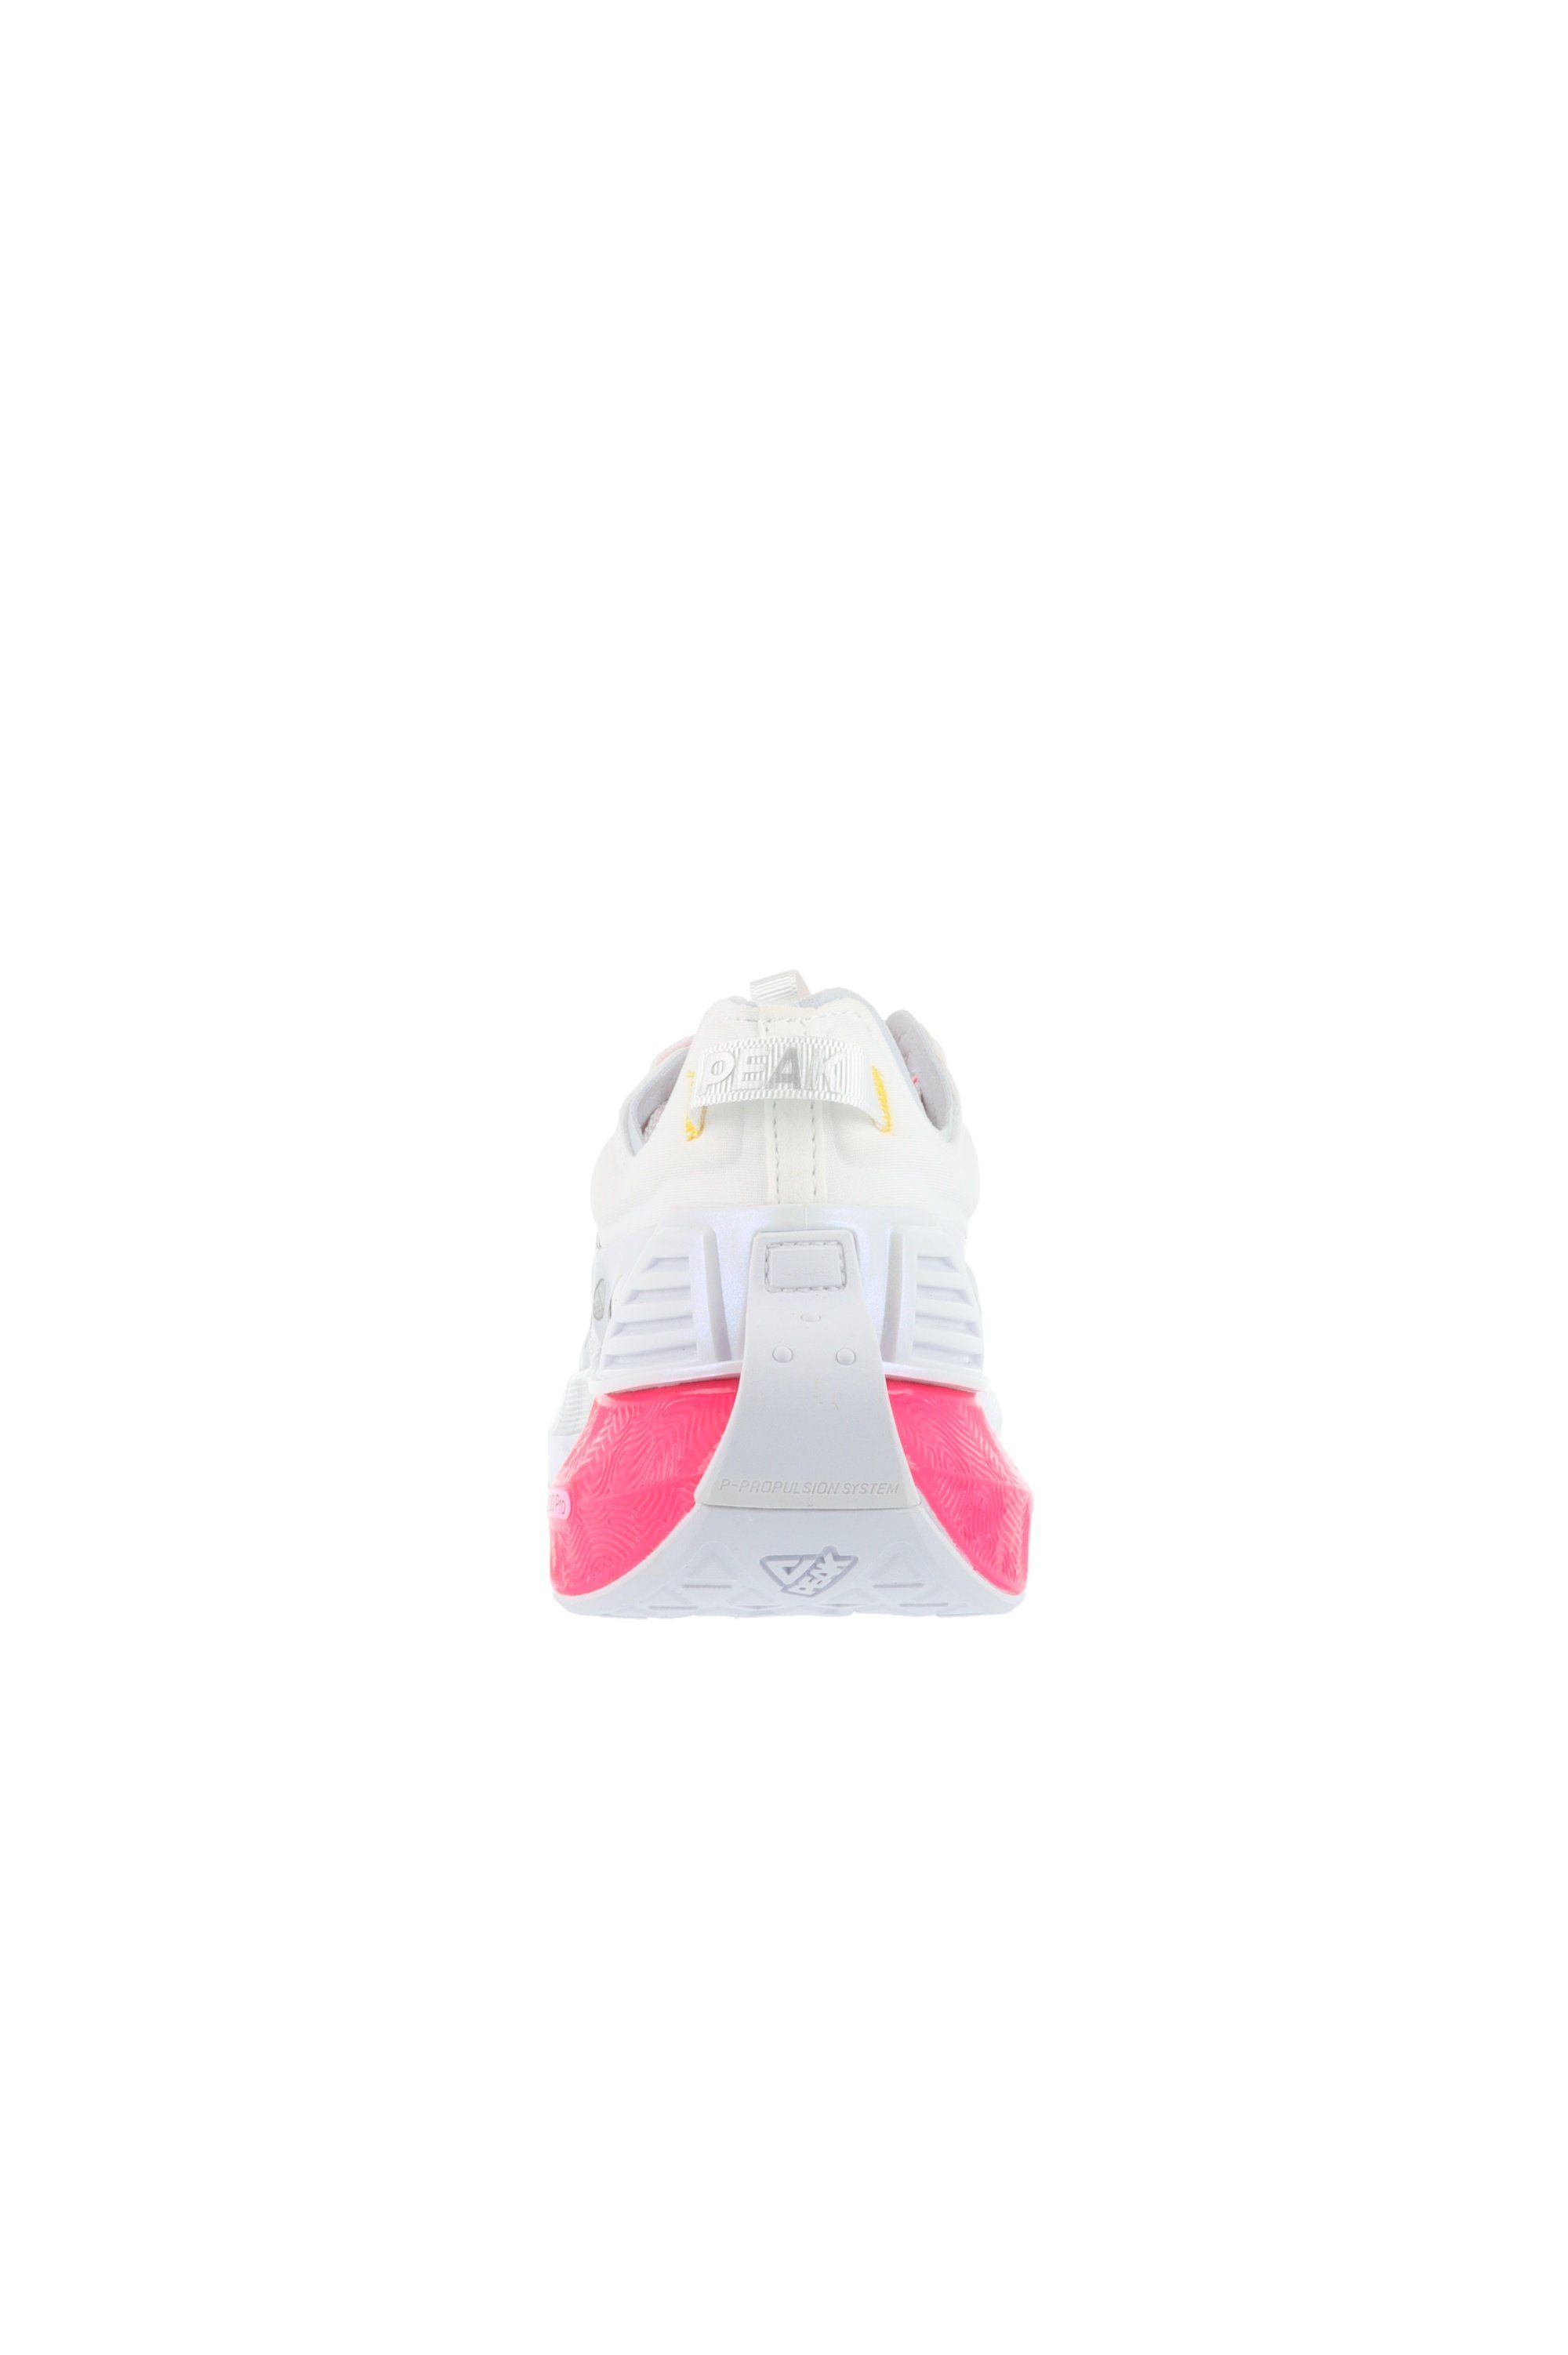 Schuhe Sportschuhe PEAK TaiChi 3.0 Pro Women Laufschuh mit TAICHI-Mittelsohlentechnologie